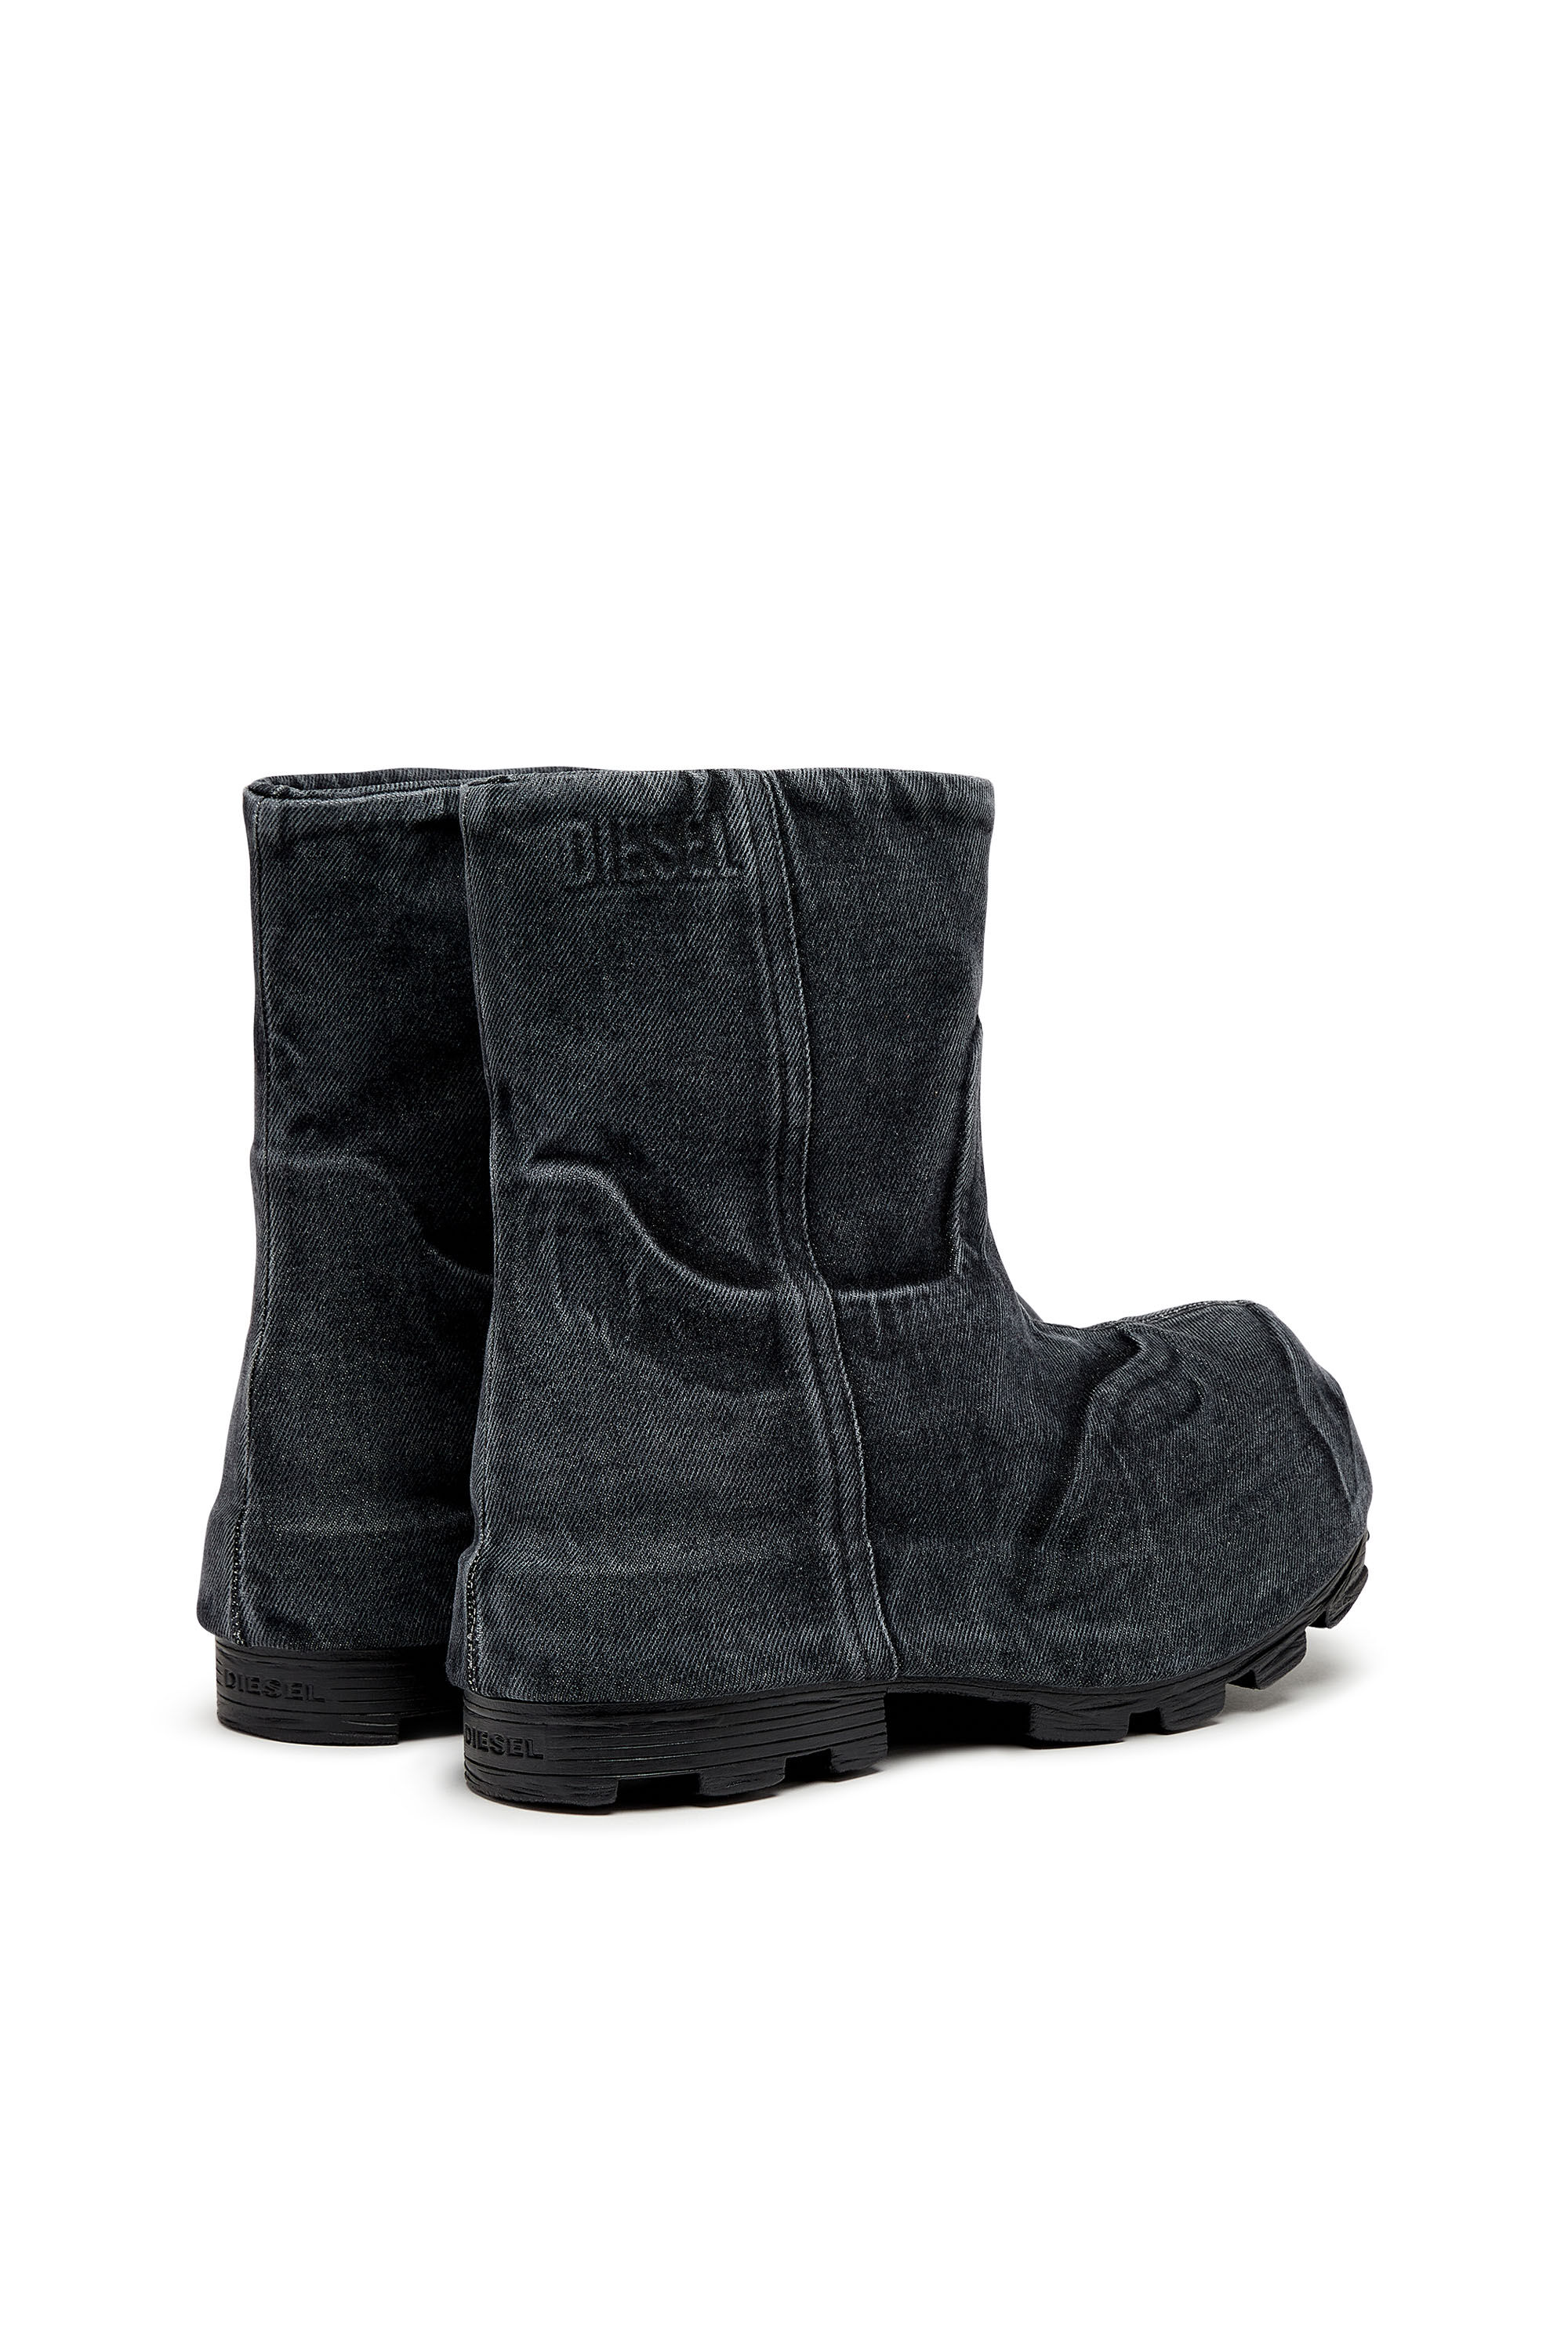 Women's D-Hammer-Chelsea boots in washed denim | Black | Diesel